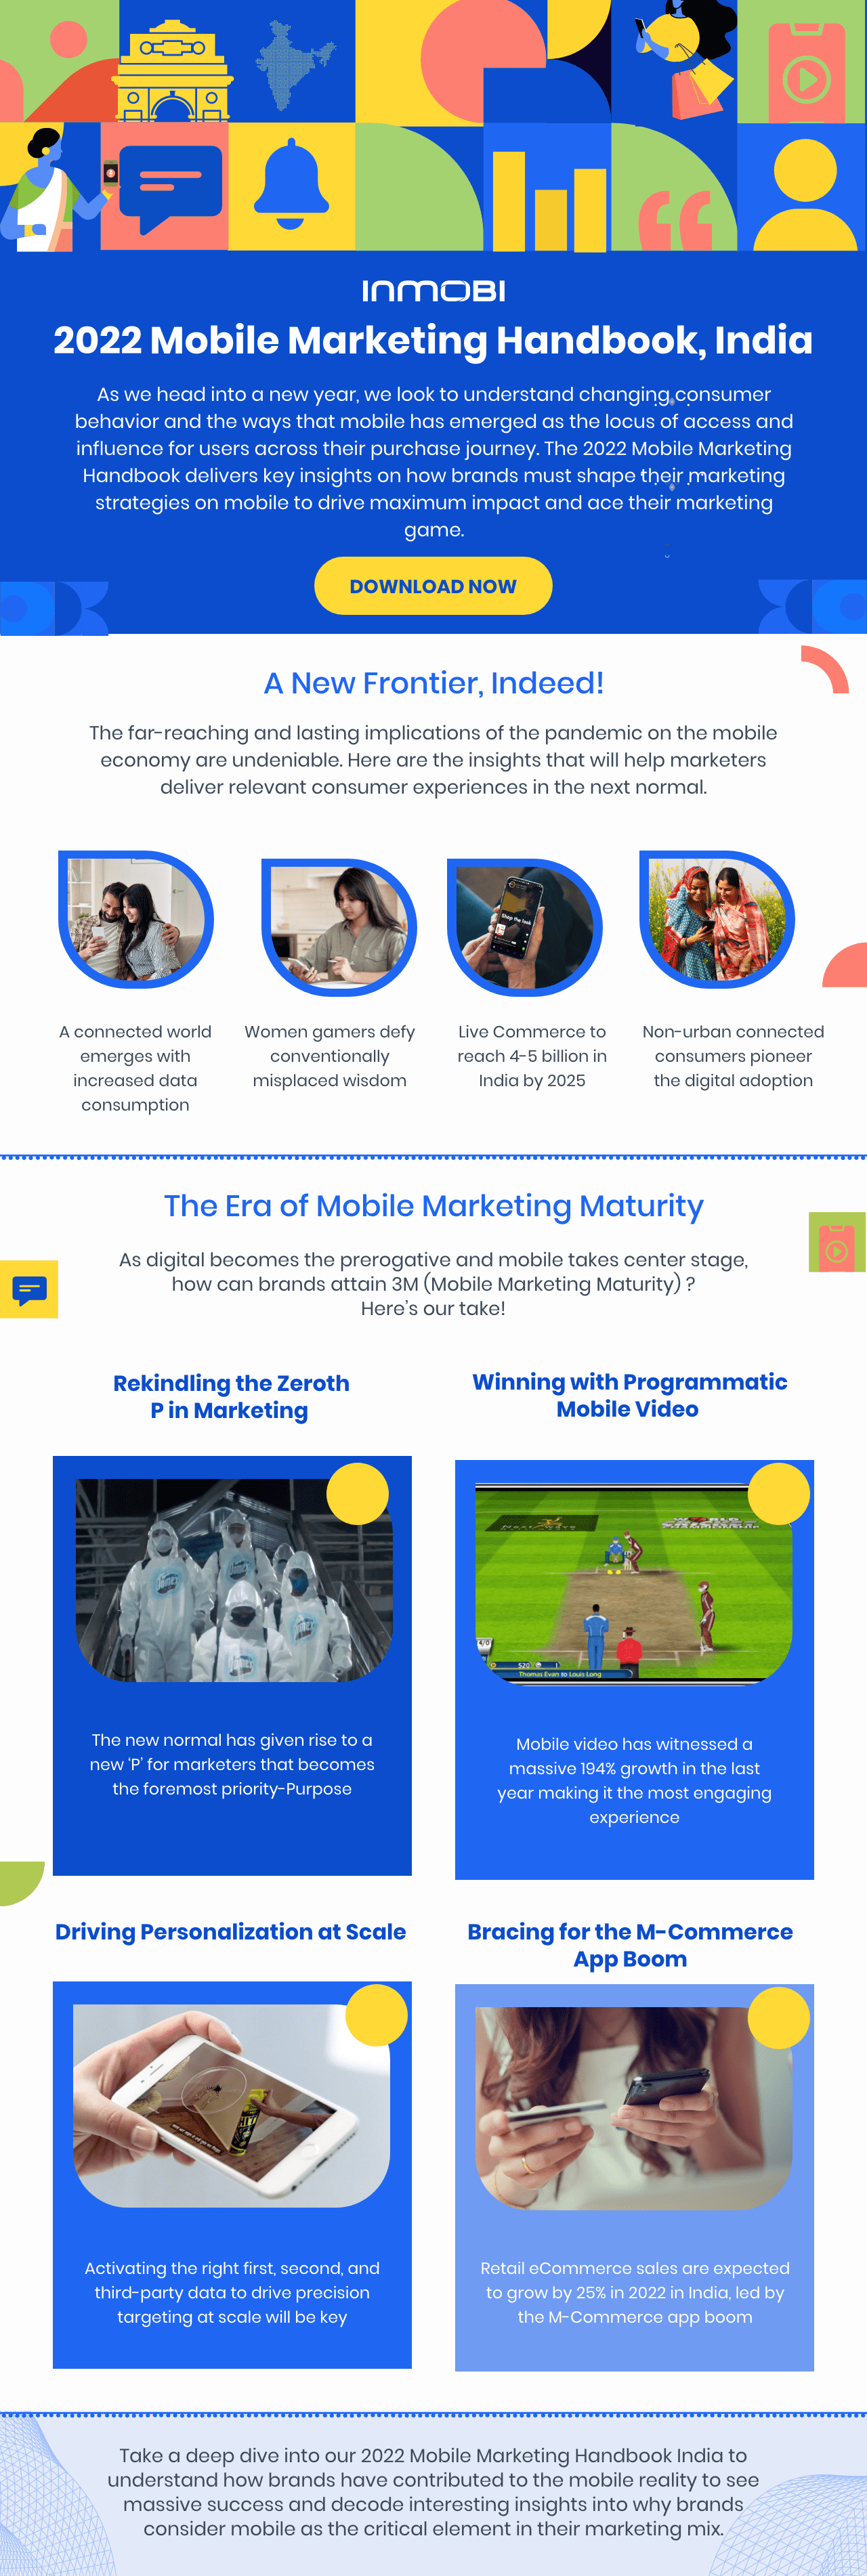 India mobile marketing 2022